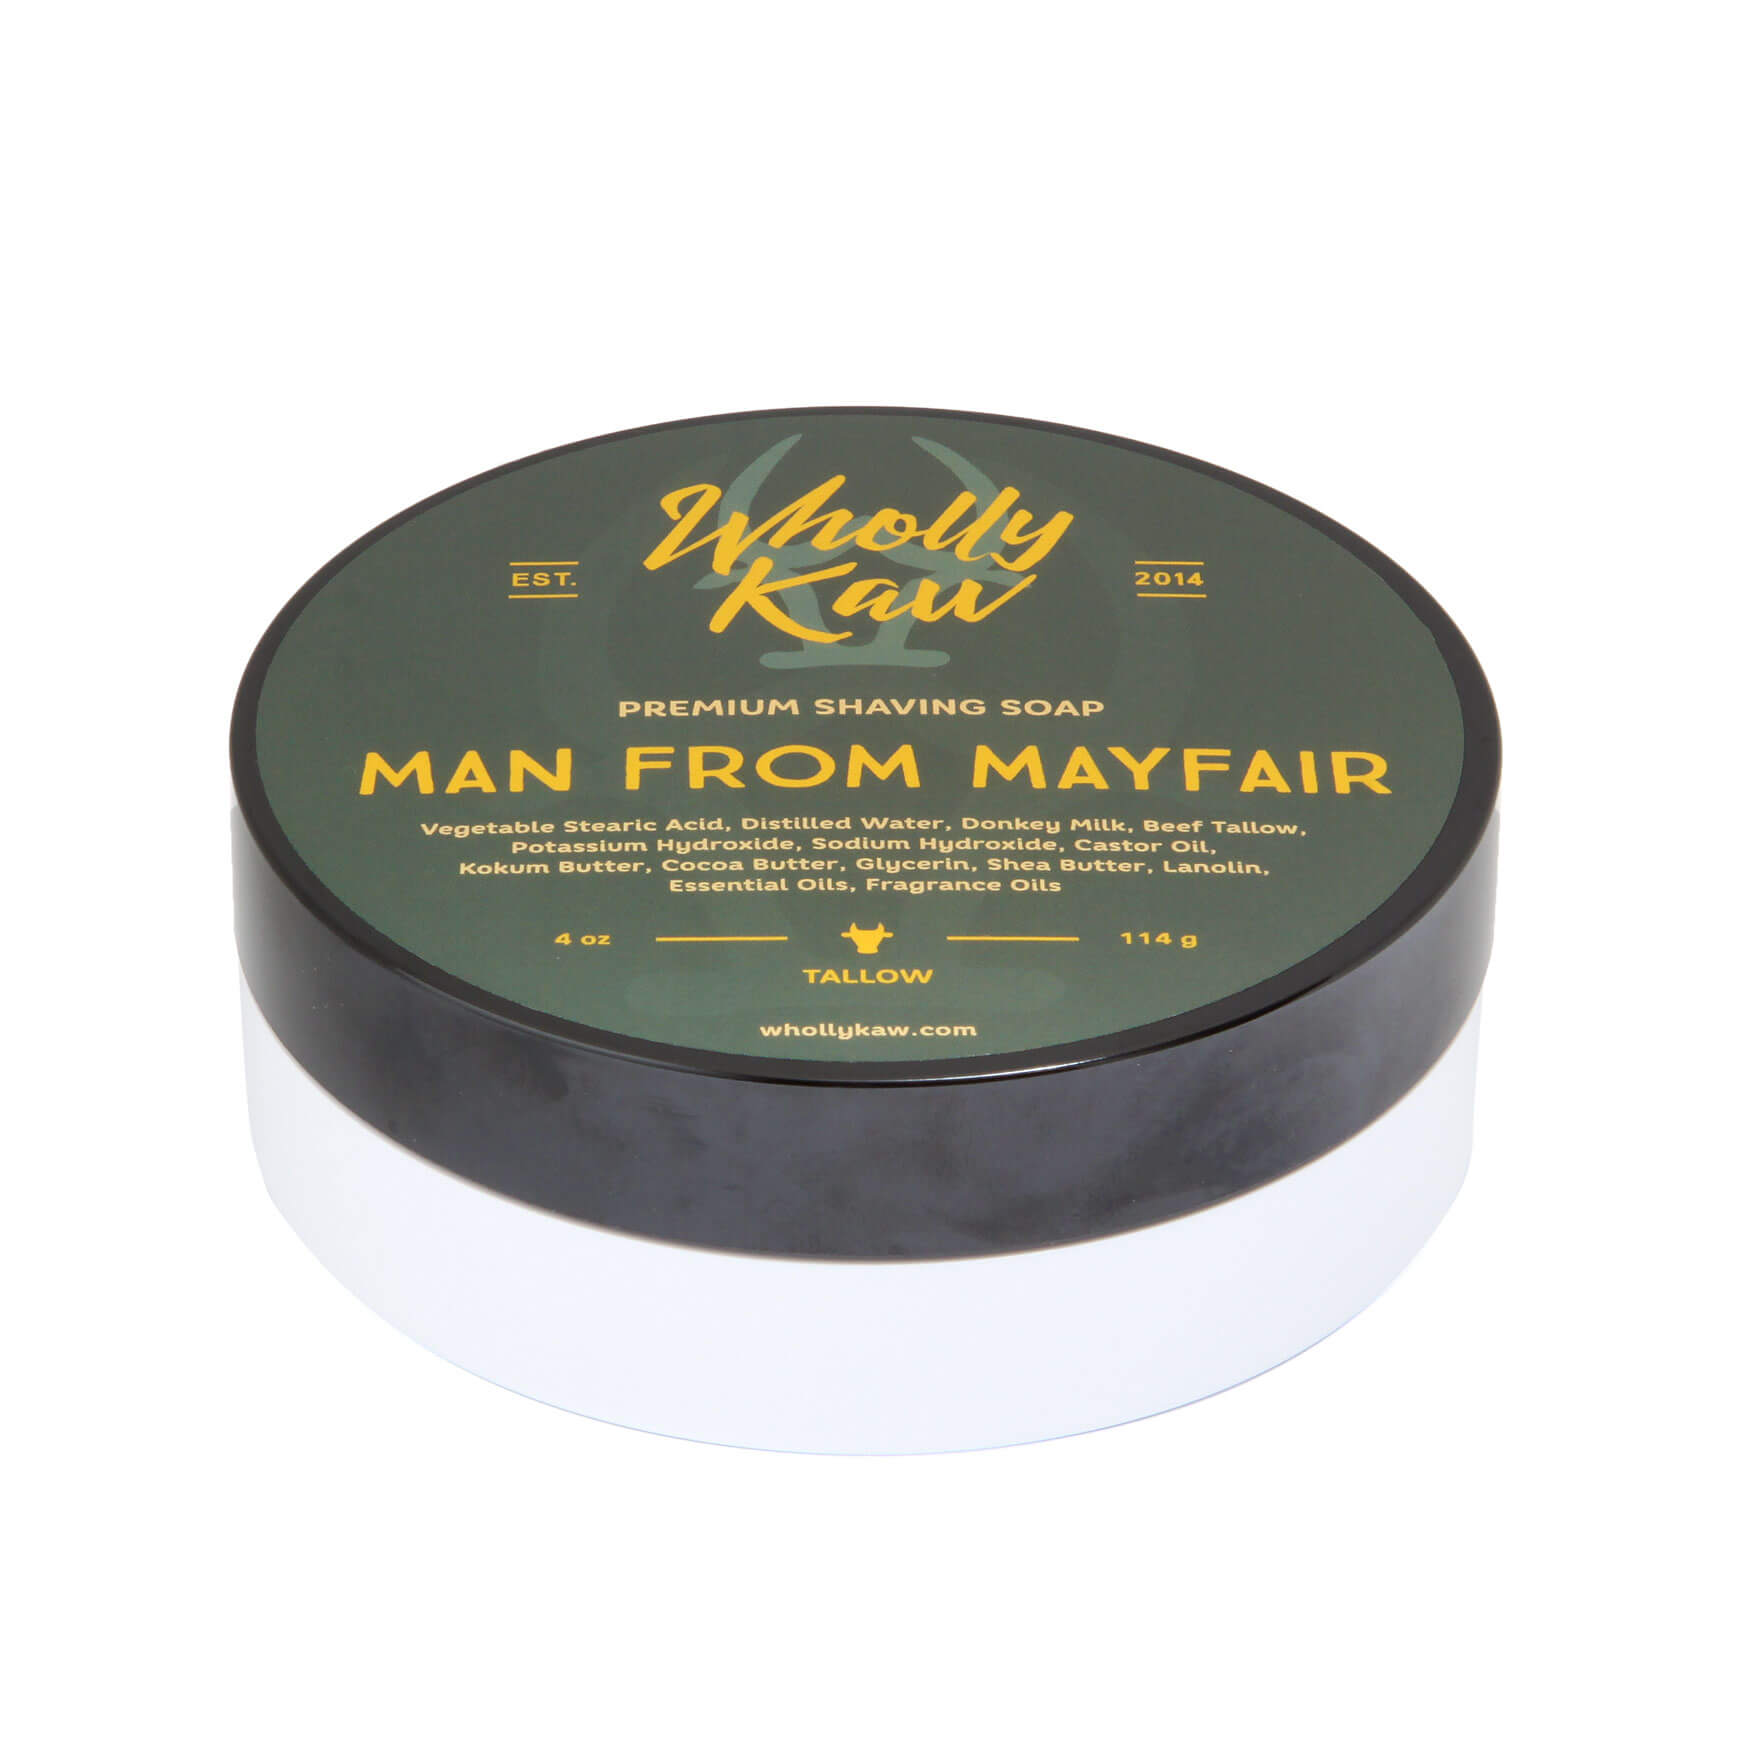 Wholly Kaw Man From Mayfair Shaving Soap